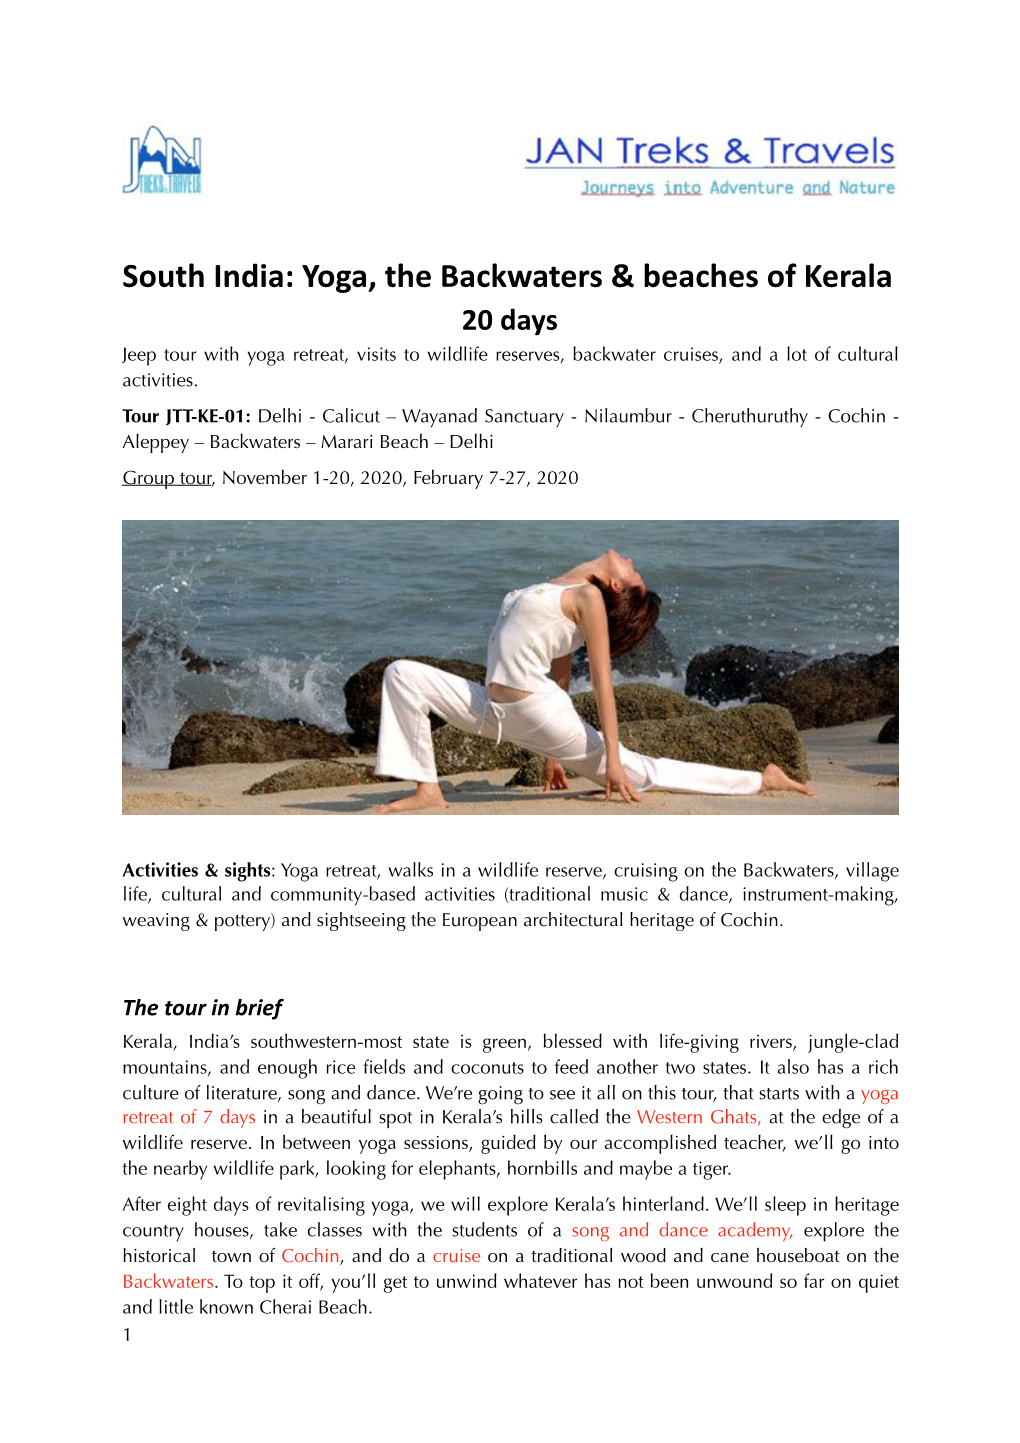 Yoga, the Backwaters & Beaches of Kerala